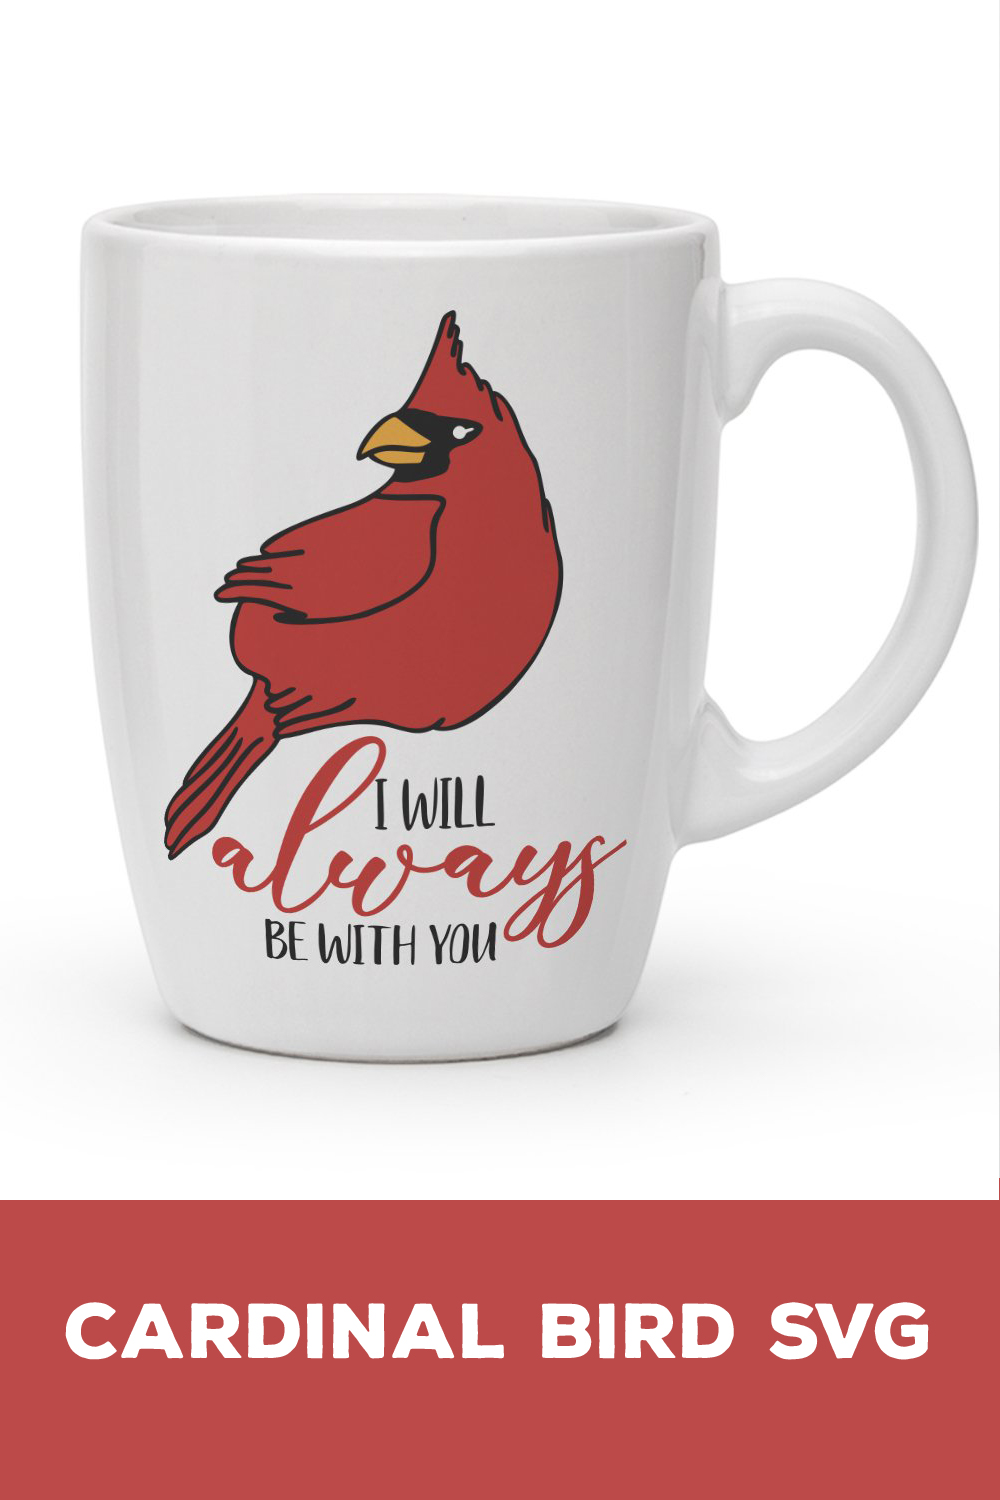 White coffee mug with a cardinal bird on it.